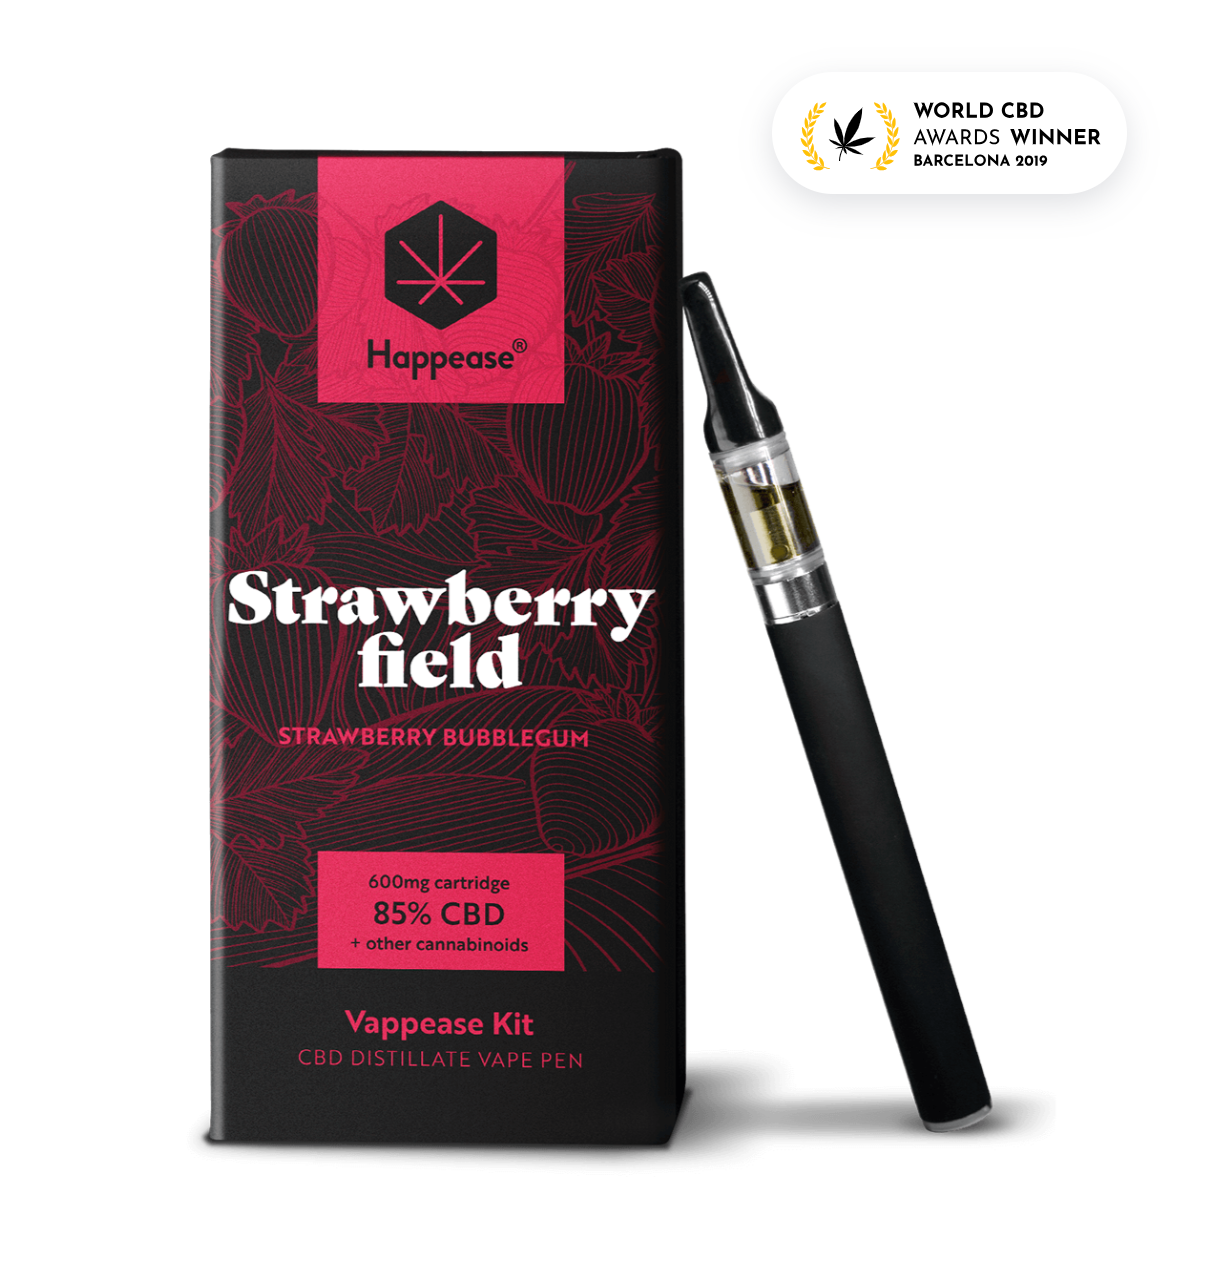 Happease Vape Pen  - Strawberry Field "Strawberry Bubblegum" (85% CBD)